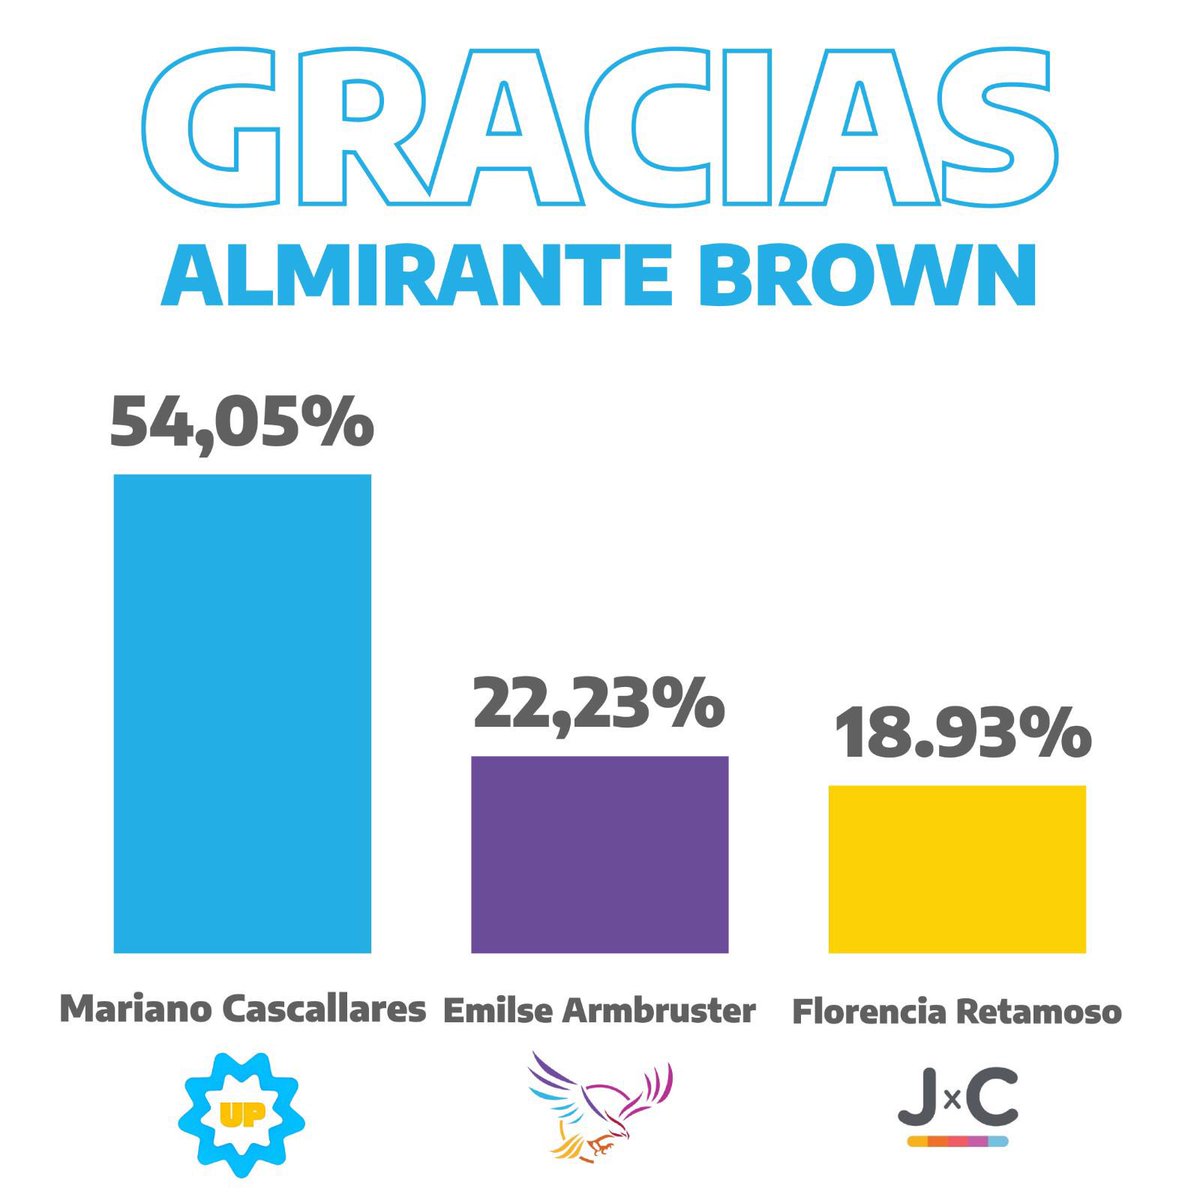 🇦🇷✌️Gracias Almirante Brown! #BrownCumple

@CascallaresPJ 
@JuanoFabiani 
@SergioMassa 
@Kicillofok